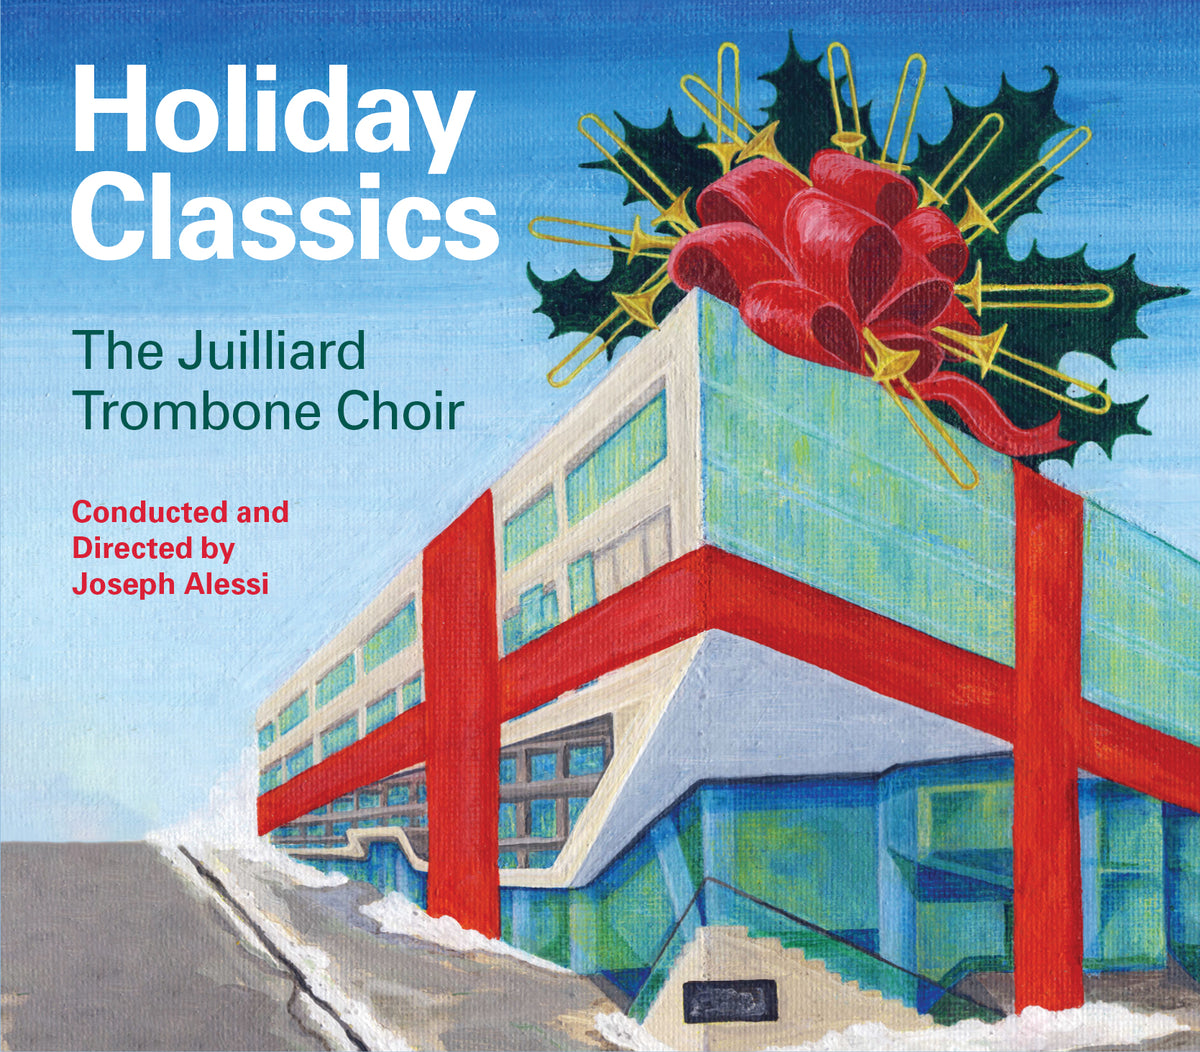 CD: The Juilliard Trombone Choir Holiday Classics